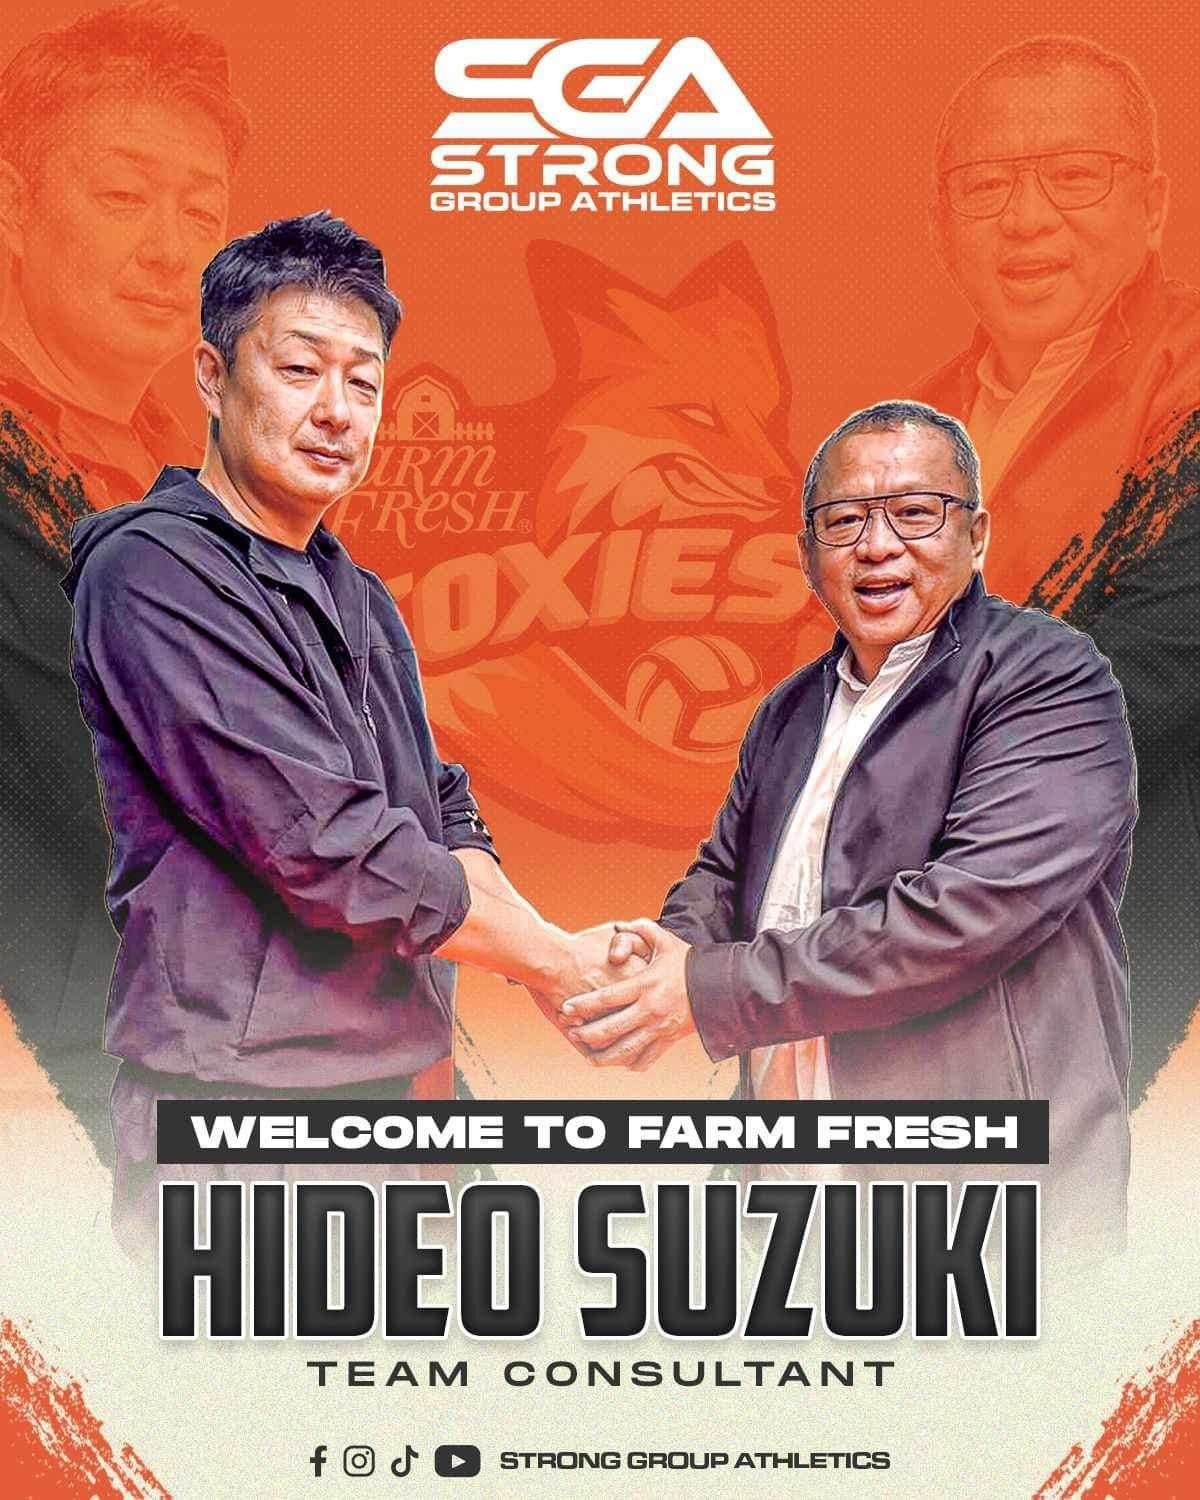 Farm Fresh signs Kurashiki Ablaze coach as consultant